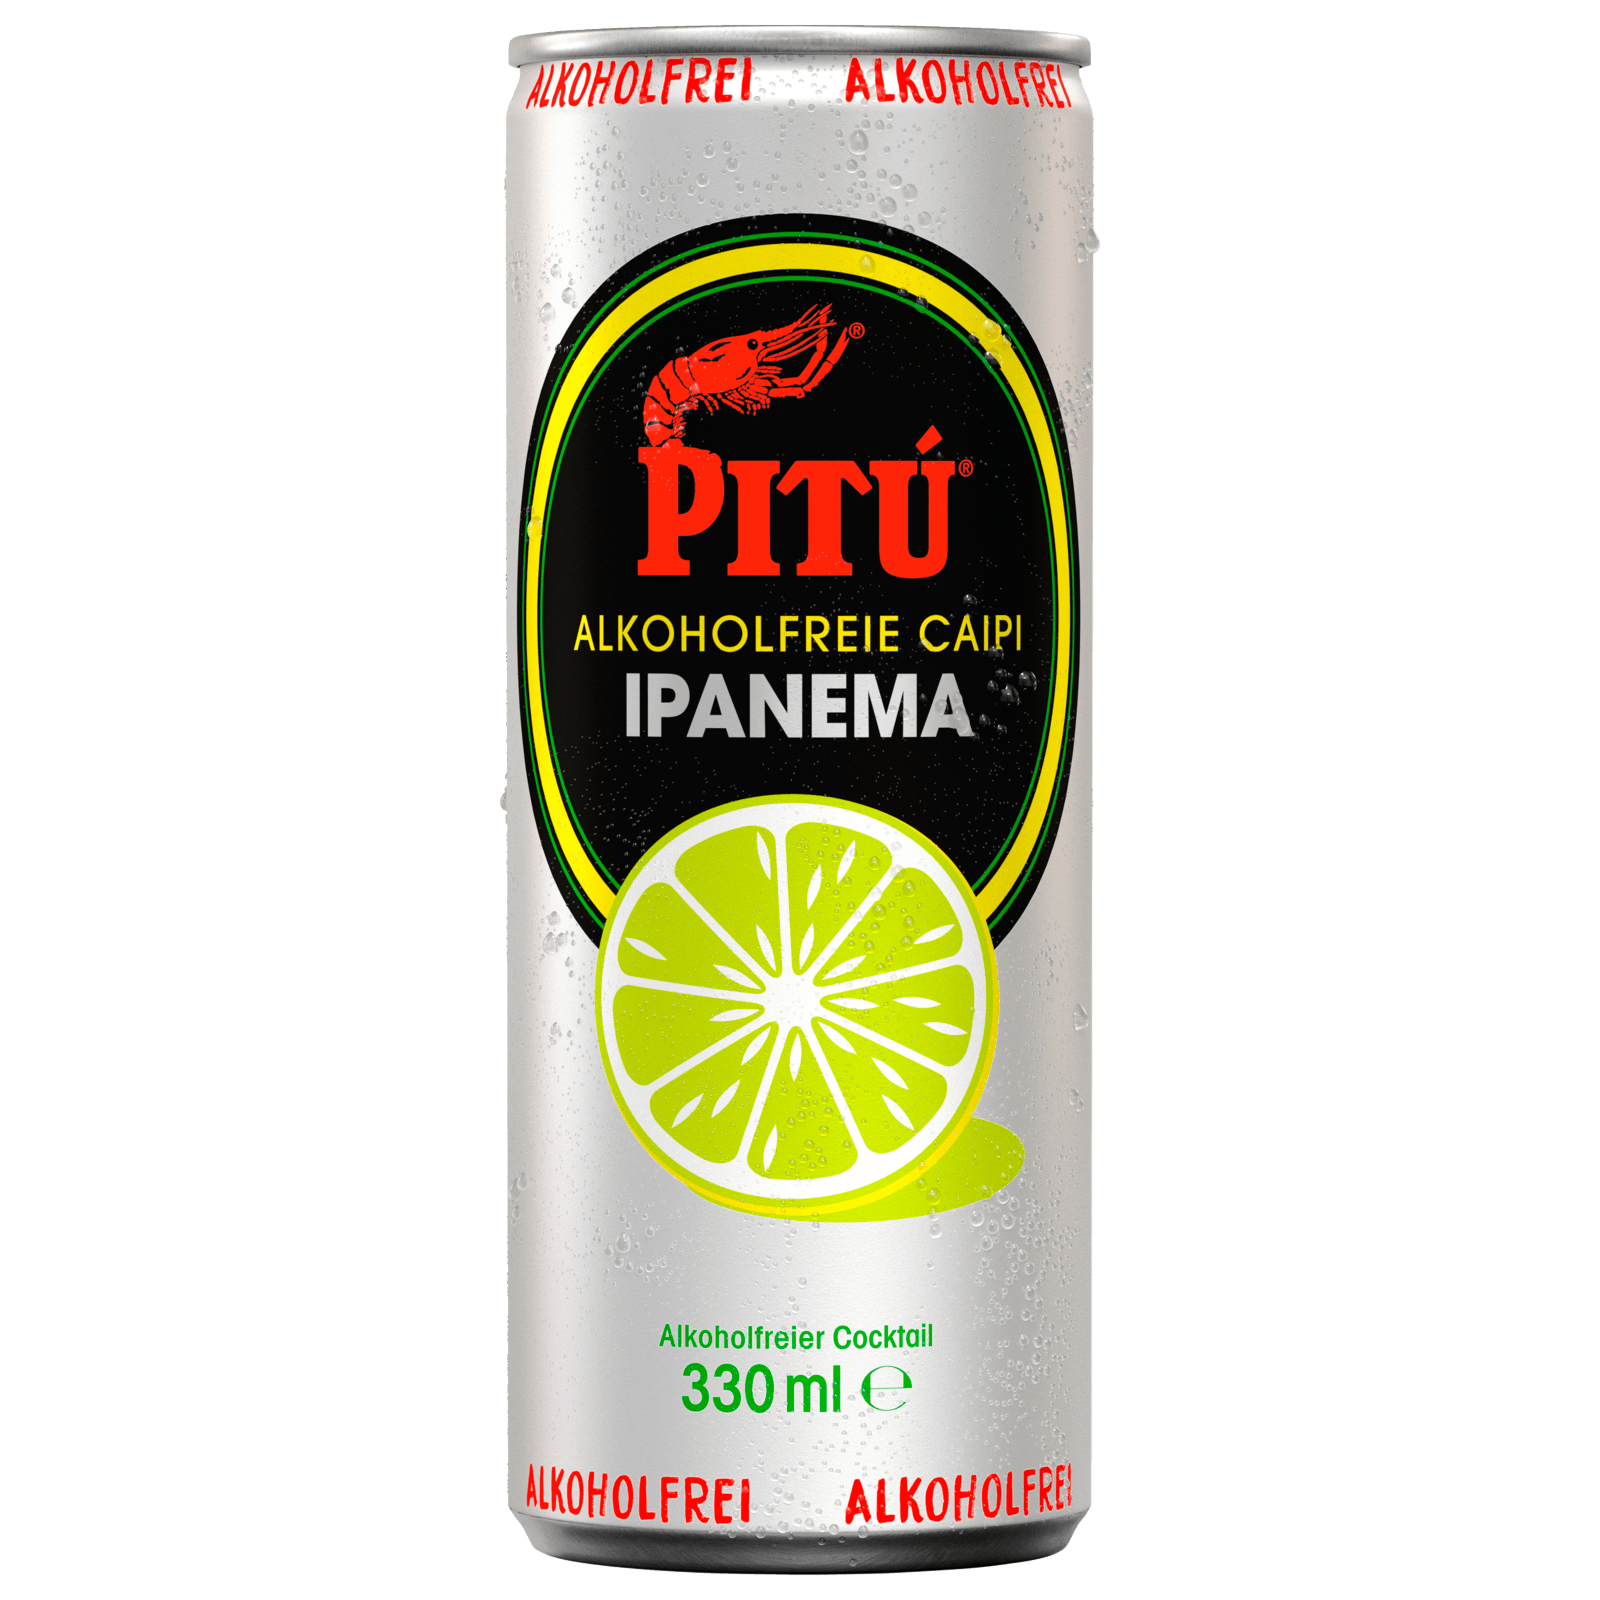 PITU Alkoholfreier Caipi Ipanema Dose 0,33l bei REWE online bestellen!